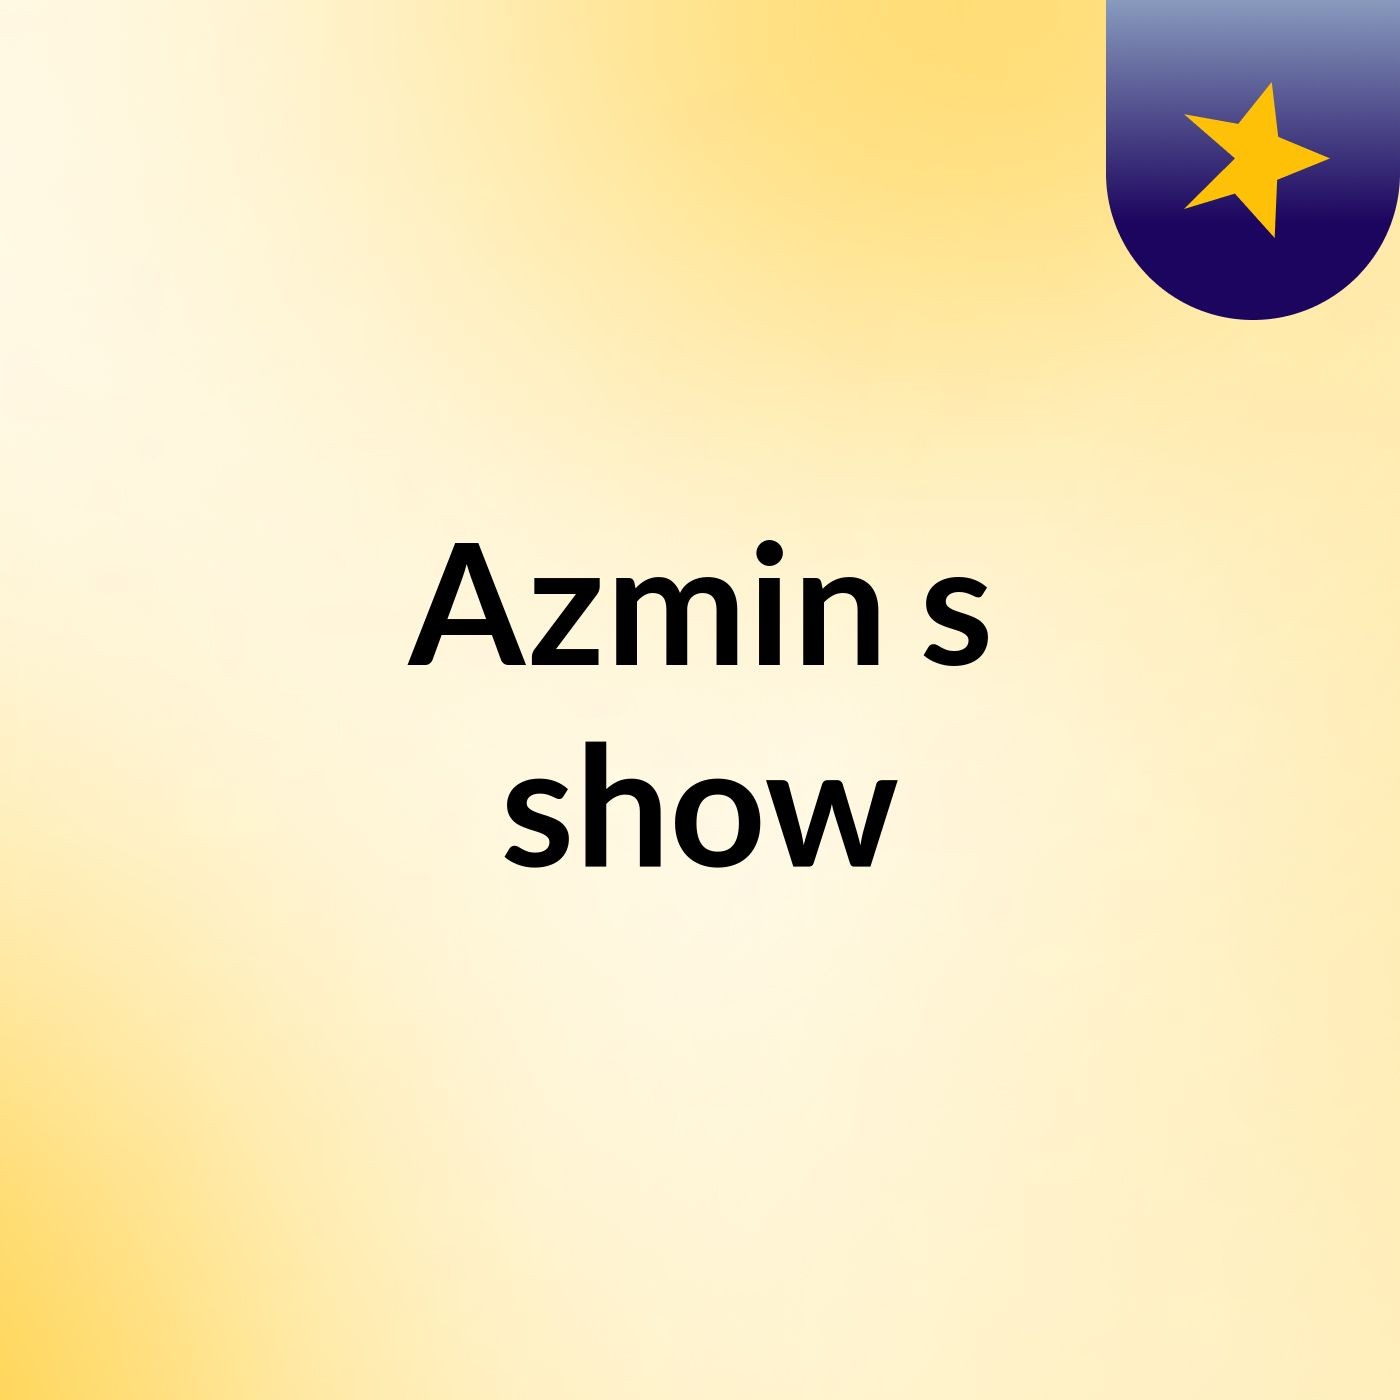 Azmin's show